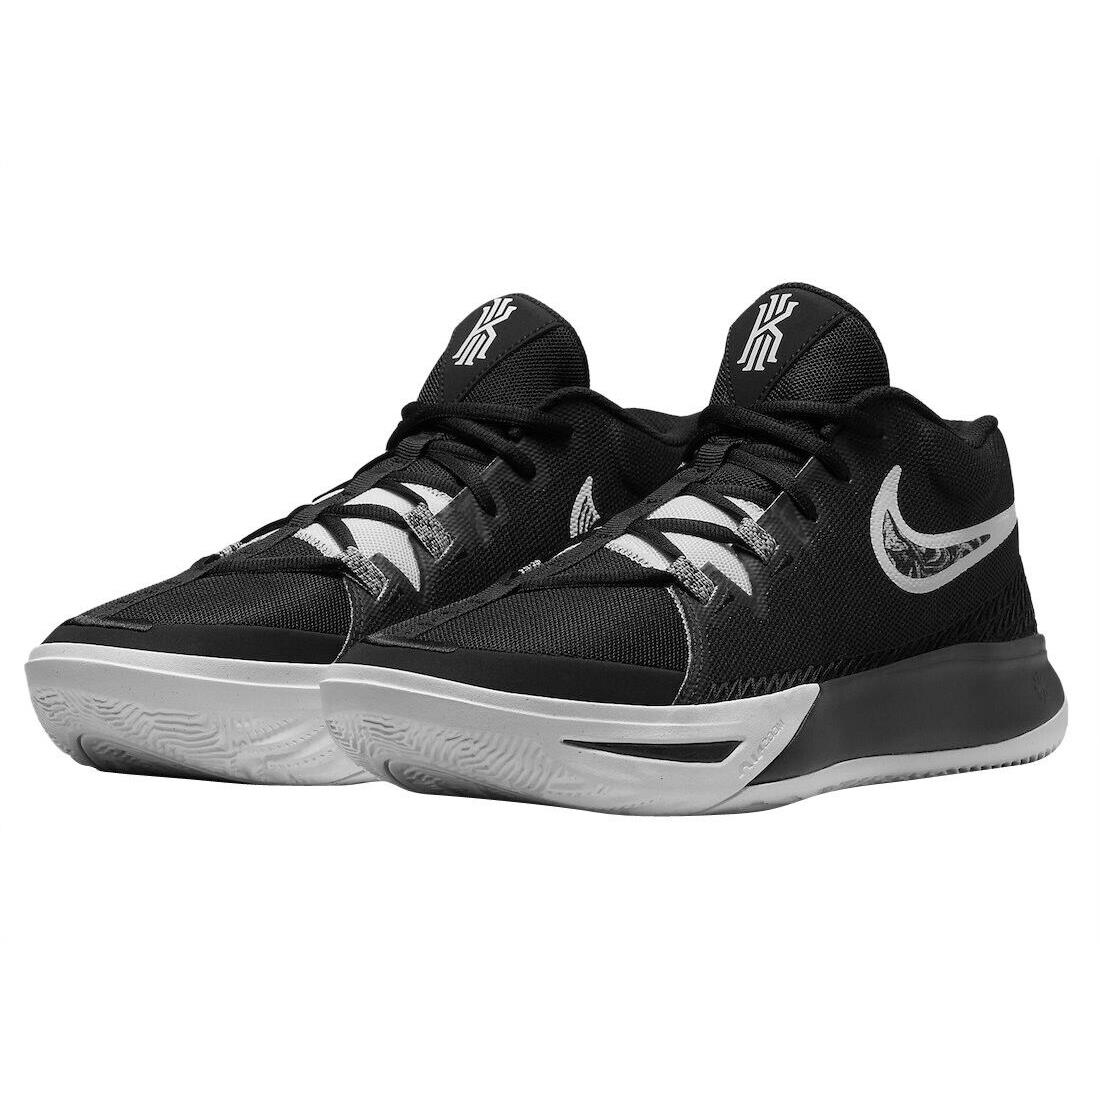 Nike Kyrie Flytrap VI Men`s Basketball Shoes Black White DM1125-001 - Black